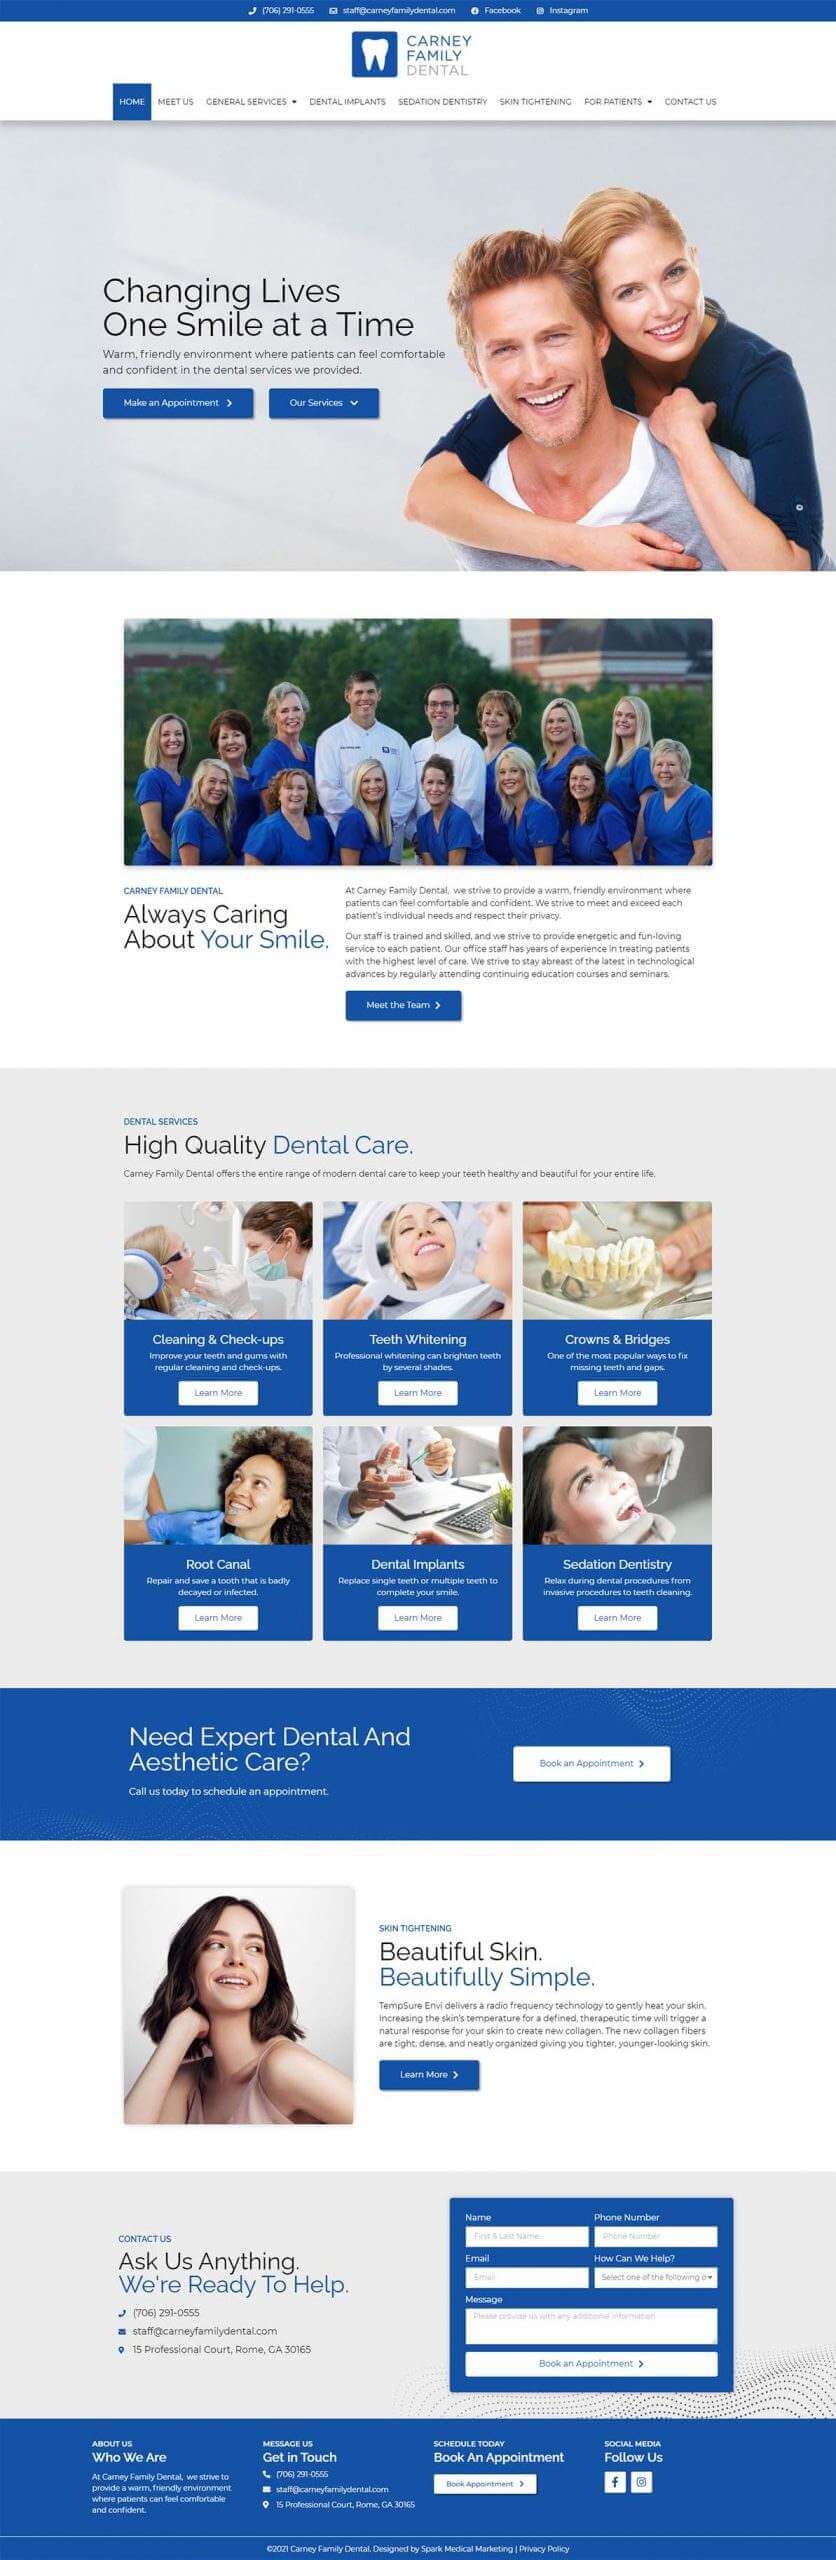 Carney Family Dental Homepage Screenshot